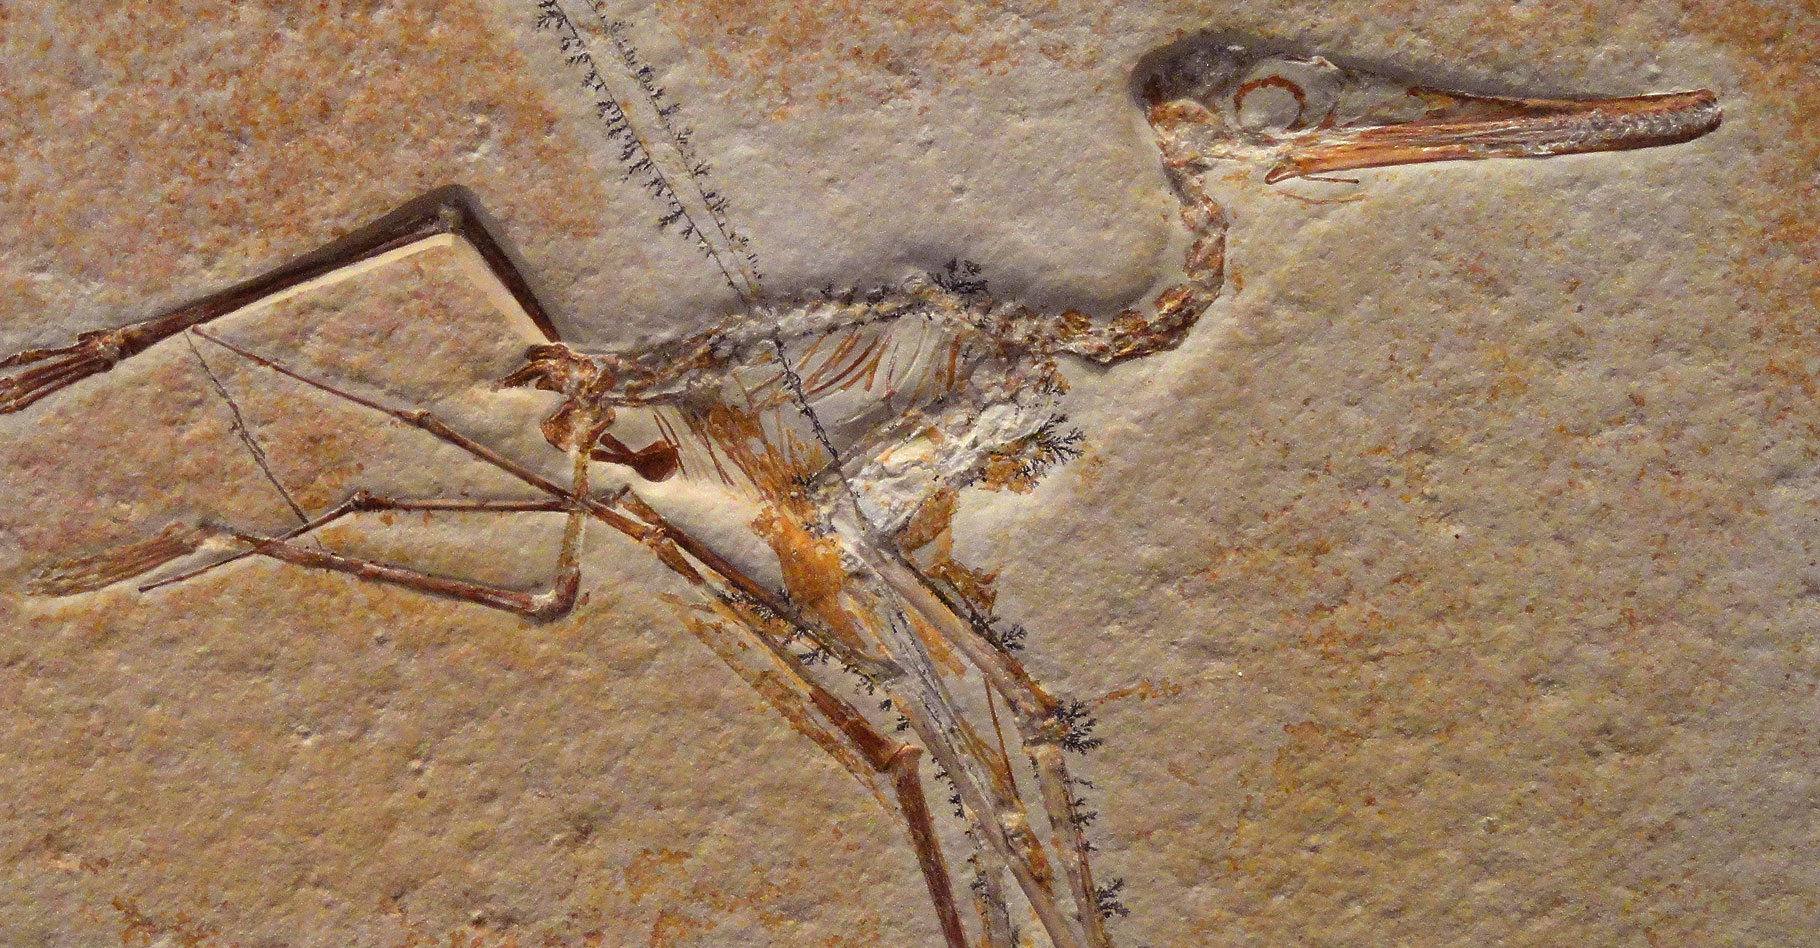 Spécimen de fossile d'un jeune&nbsp;C. elegans.&nbsp;© Daderot - CC0 1.0 Universal&nbsp;